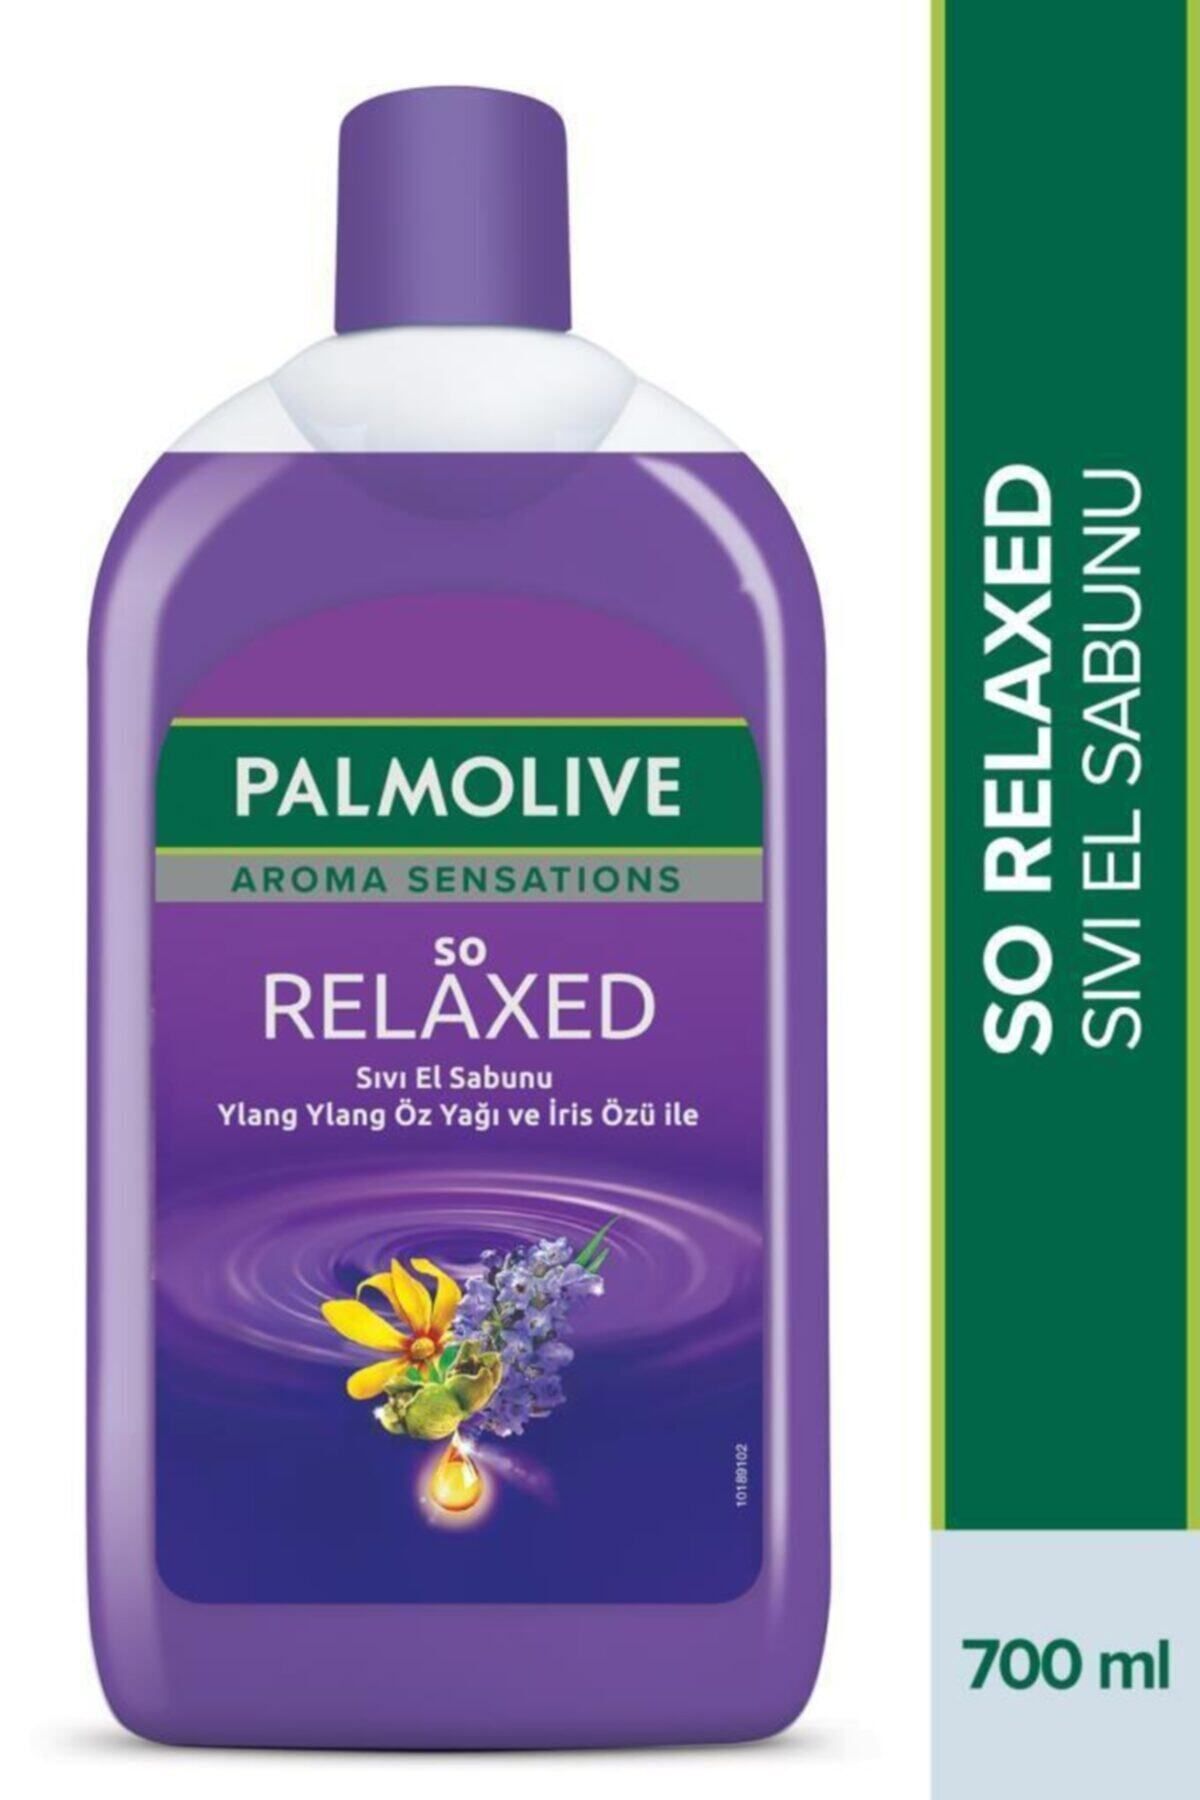 Palmolive Aroma Sensations So Relaxed Ylang Ylang Öz Yağı ve İris Özü ile Sıvı El Sabunu 700 ml